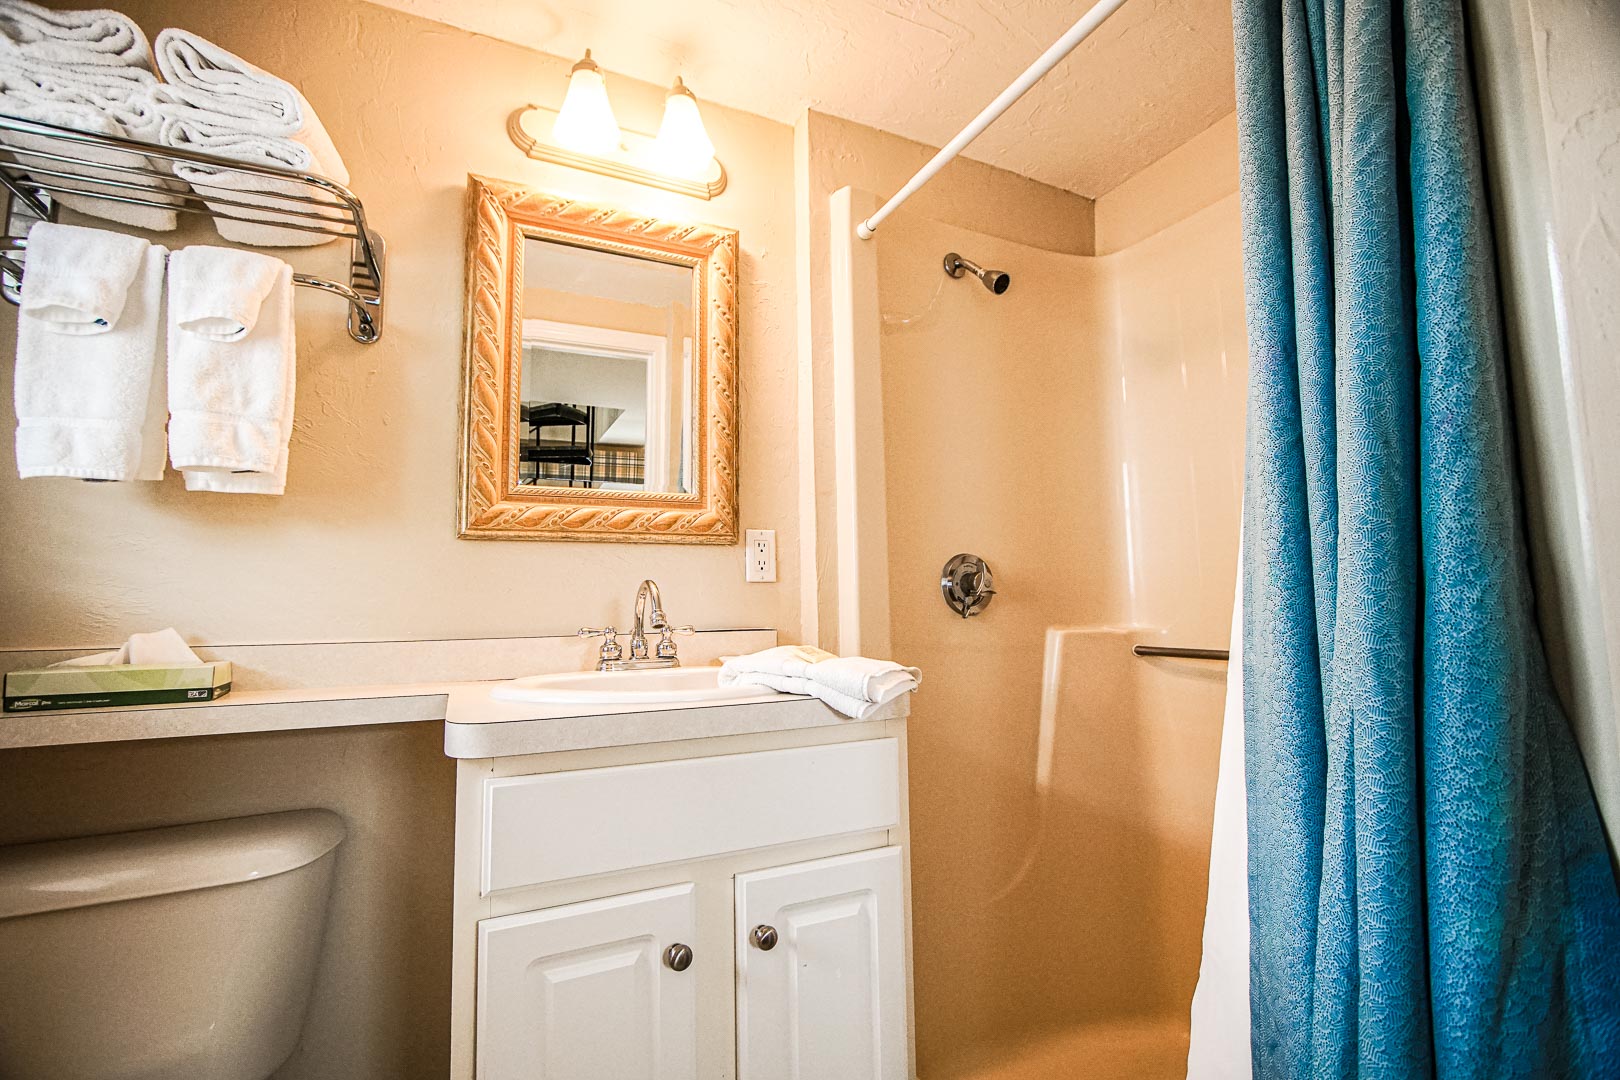 A standard bathroom at VRI's Cape Winds Resort in Massachusetts.